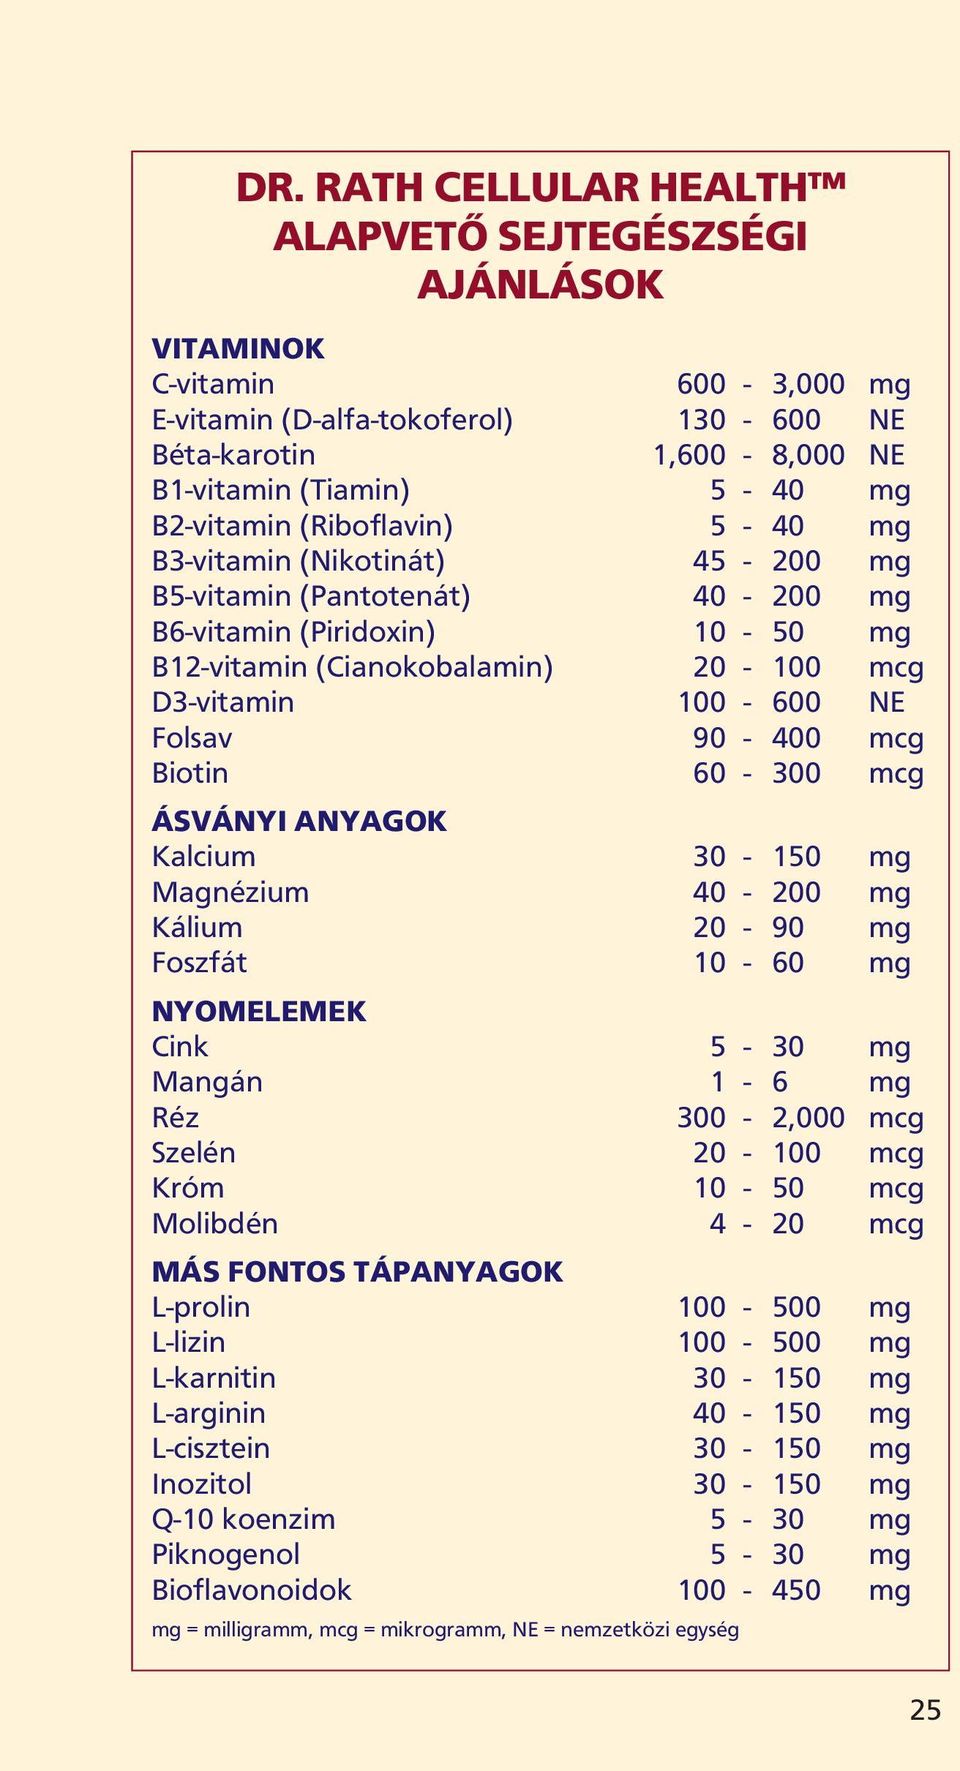 (Riboflavin) 5-40 mg B3-vitamin (Nikotinát) 45-200 mg B5-vitamin (Pantotenát) 40-200 mg B6-vitamin (Piridoxin) 10-50 mg B12-vitamin (Cianokobalamin) 20-100 mcg D3-vitamin 100-600 NE Folsav 90-400 mcg